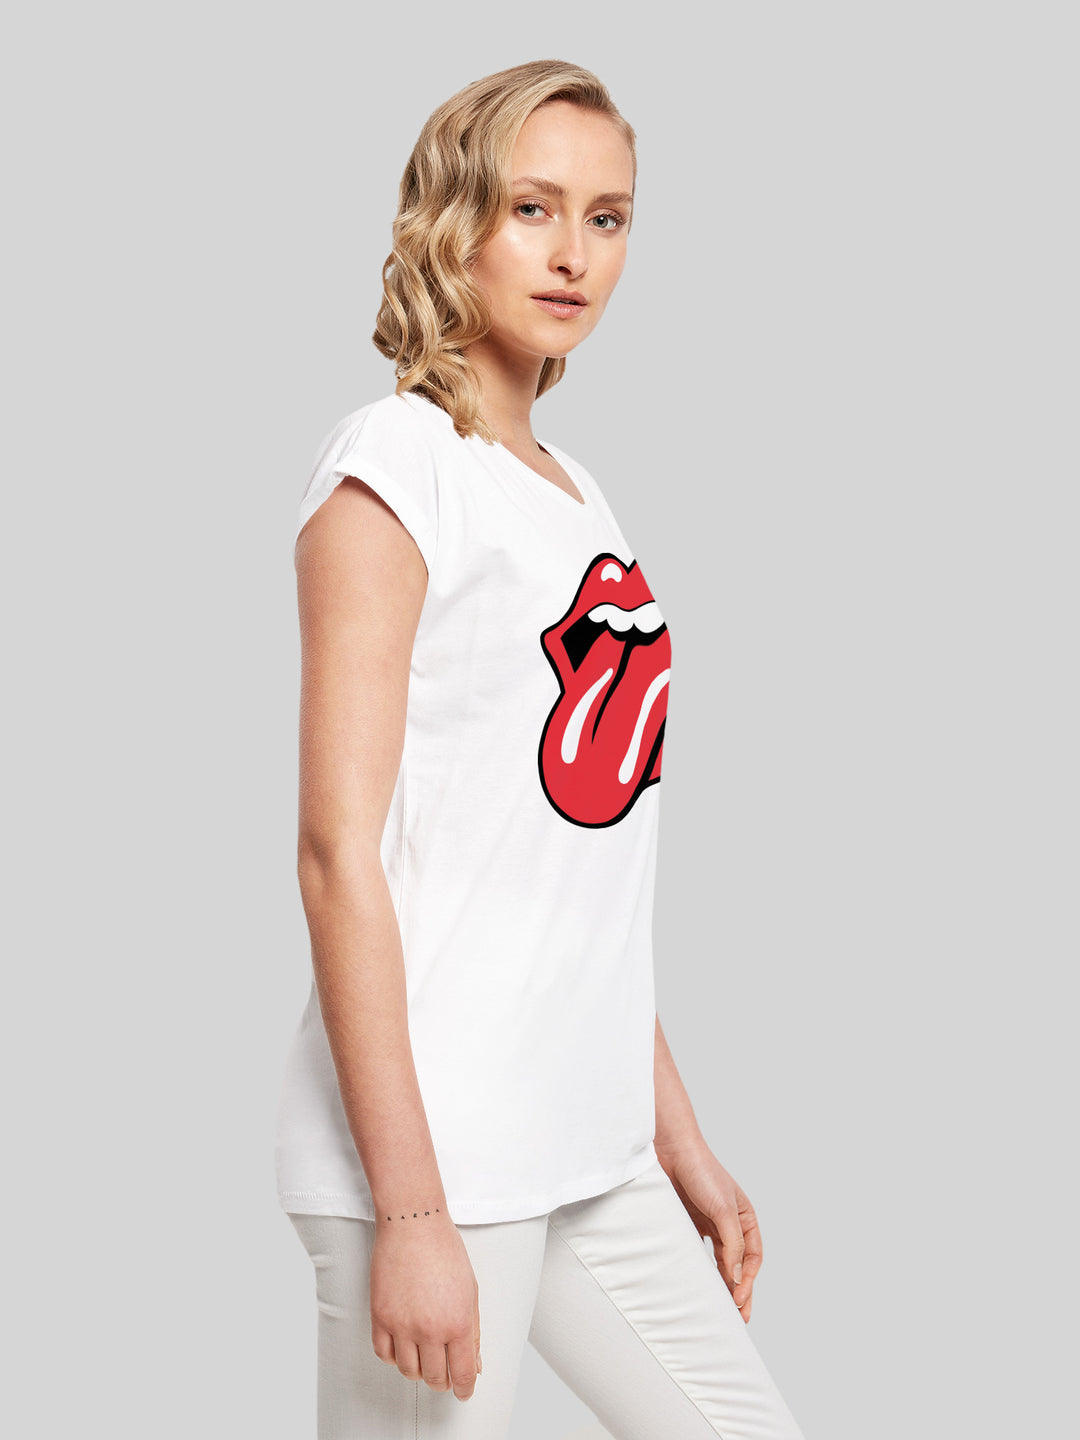 Premium – F4NT4STIC The | T-Shirt Stones Classic Tongue Rolling | Sleeve Short Lad